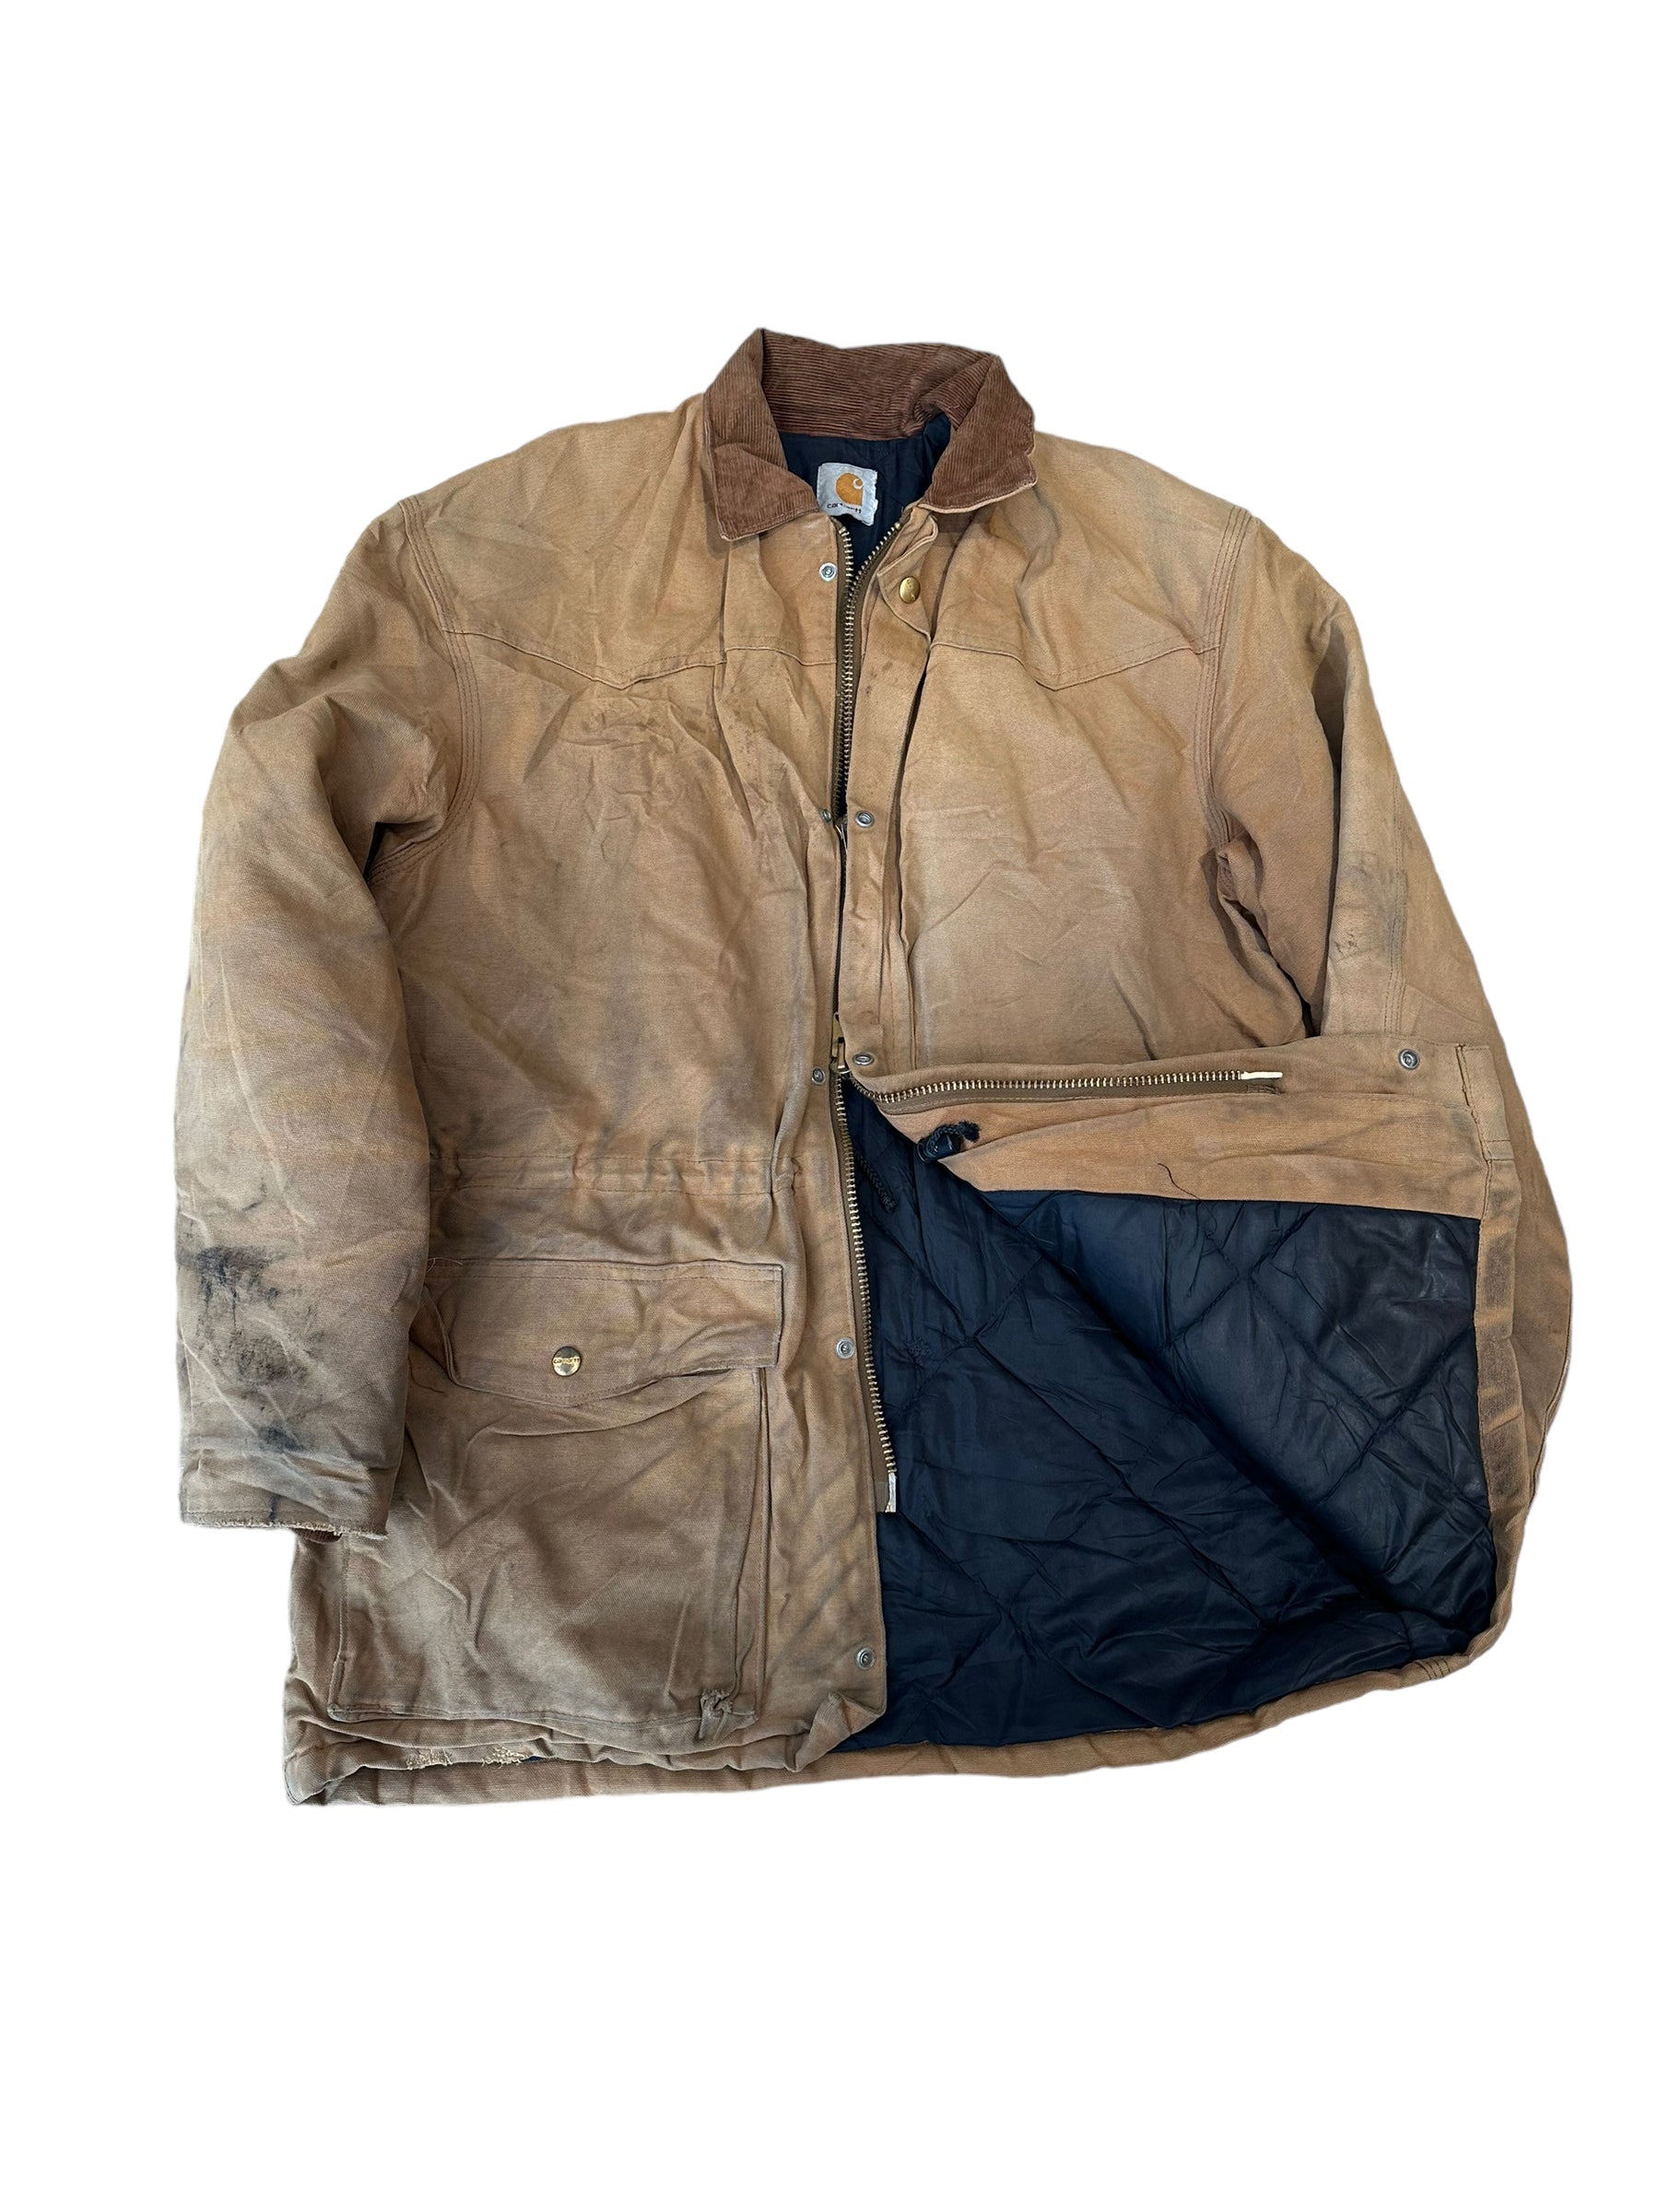 Vintage Carhartt Jacket L